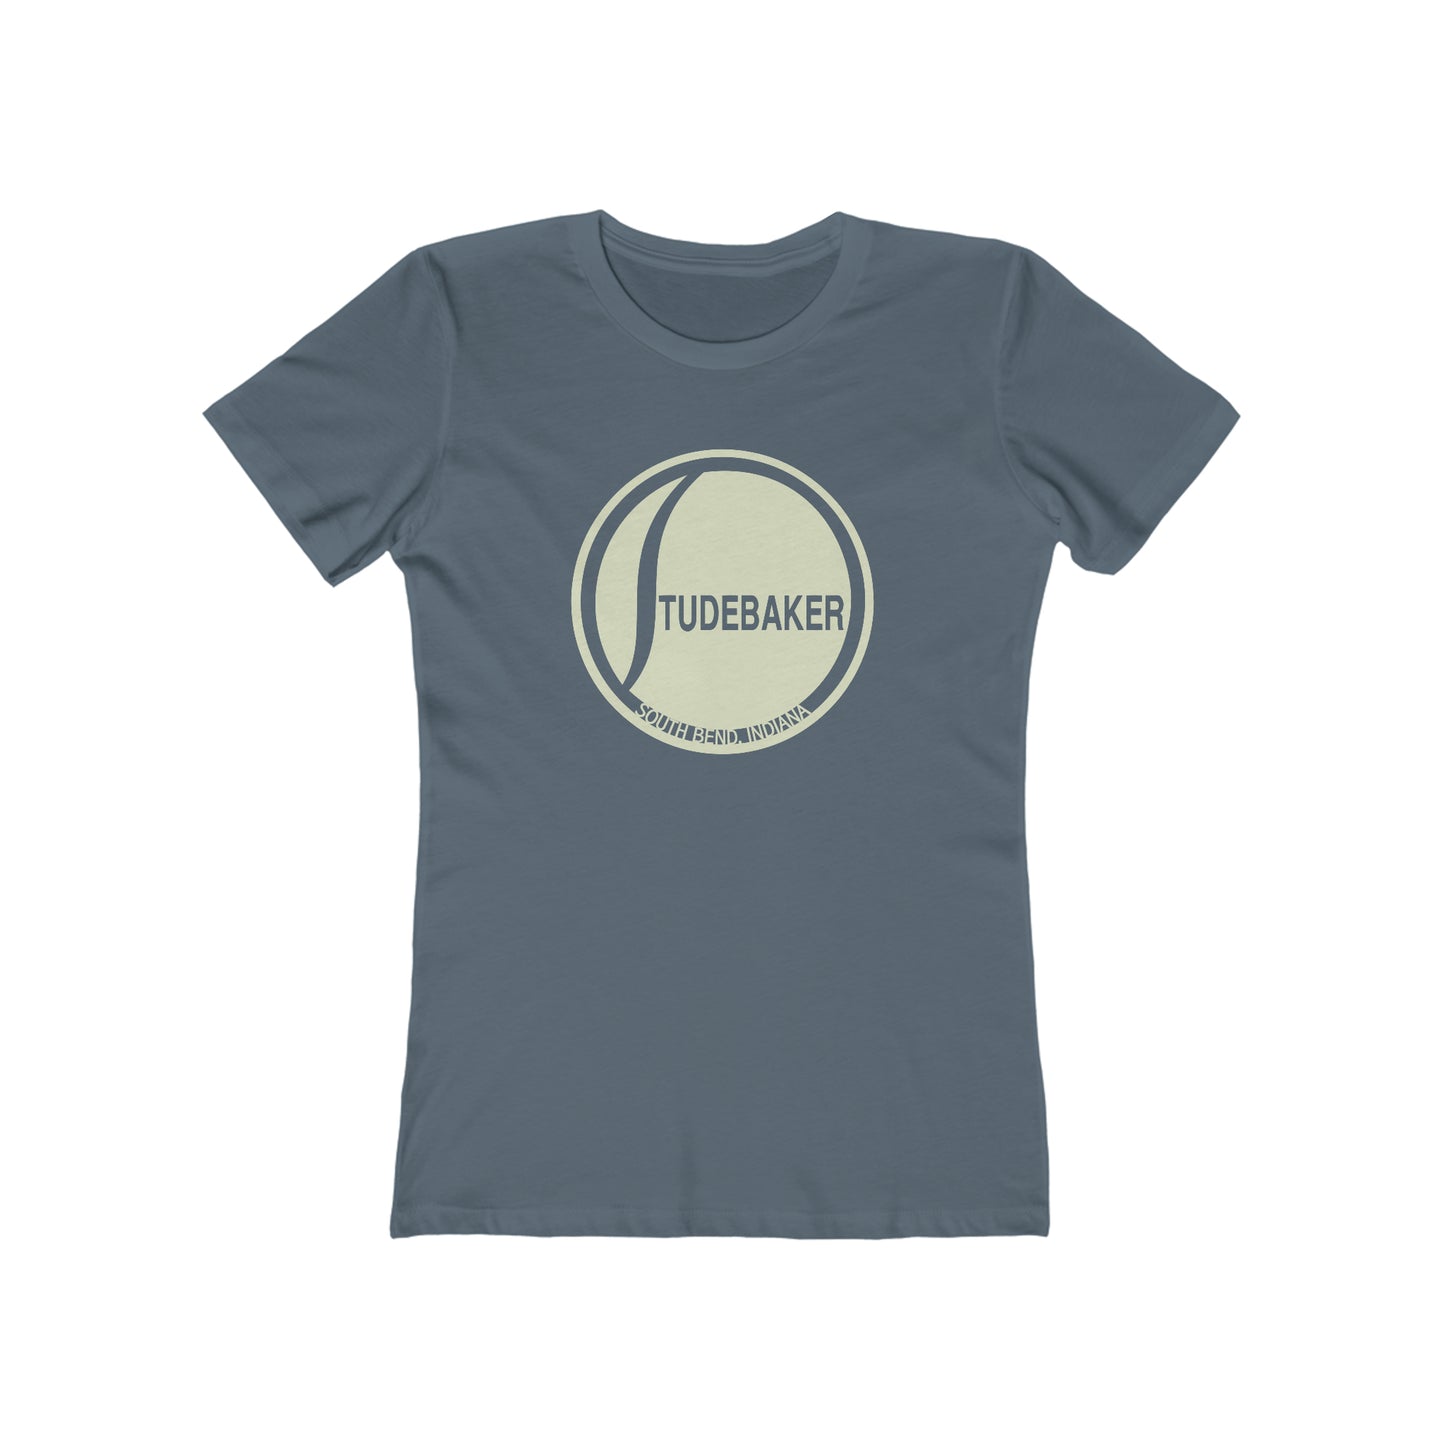 Studebaker - Women's T-shirt